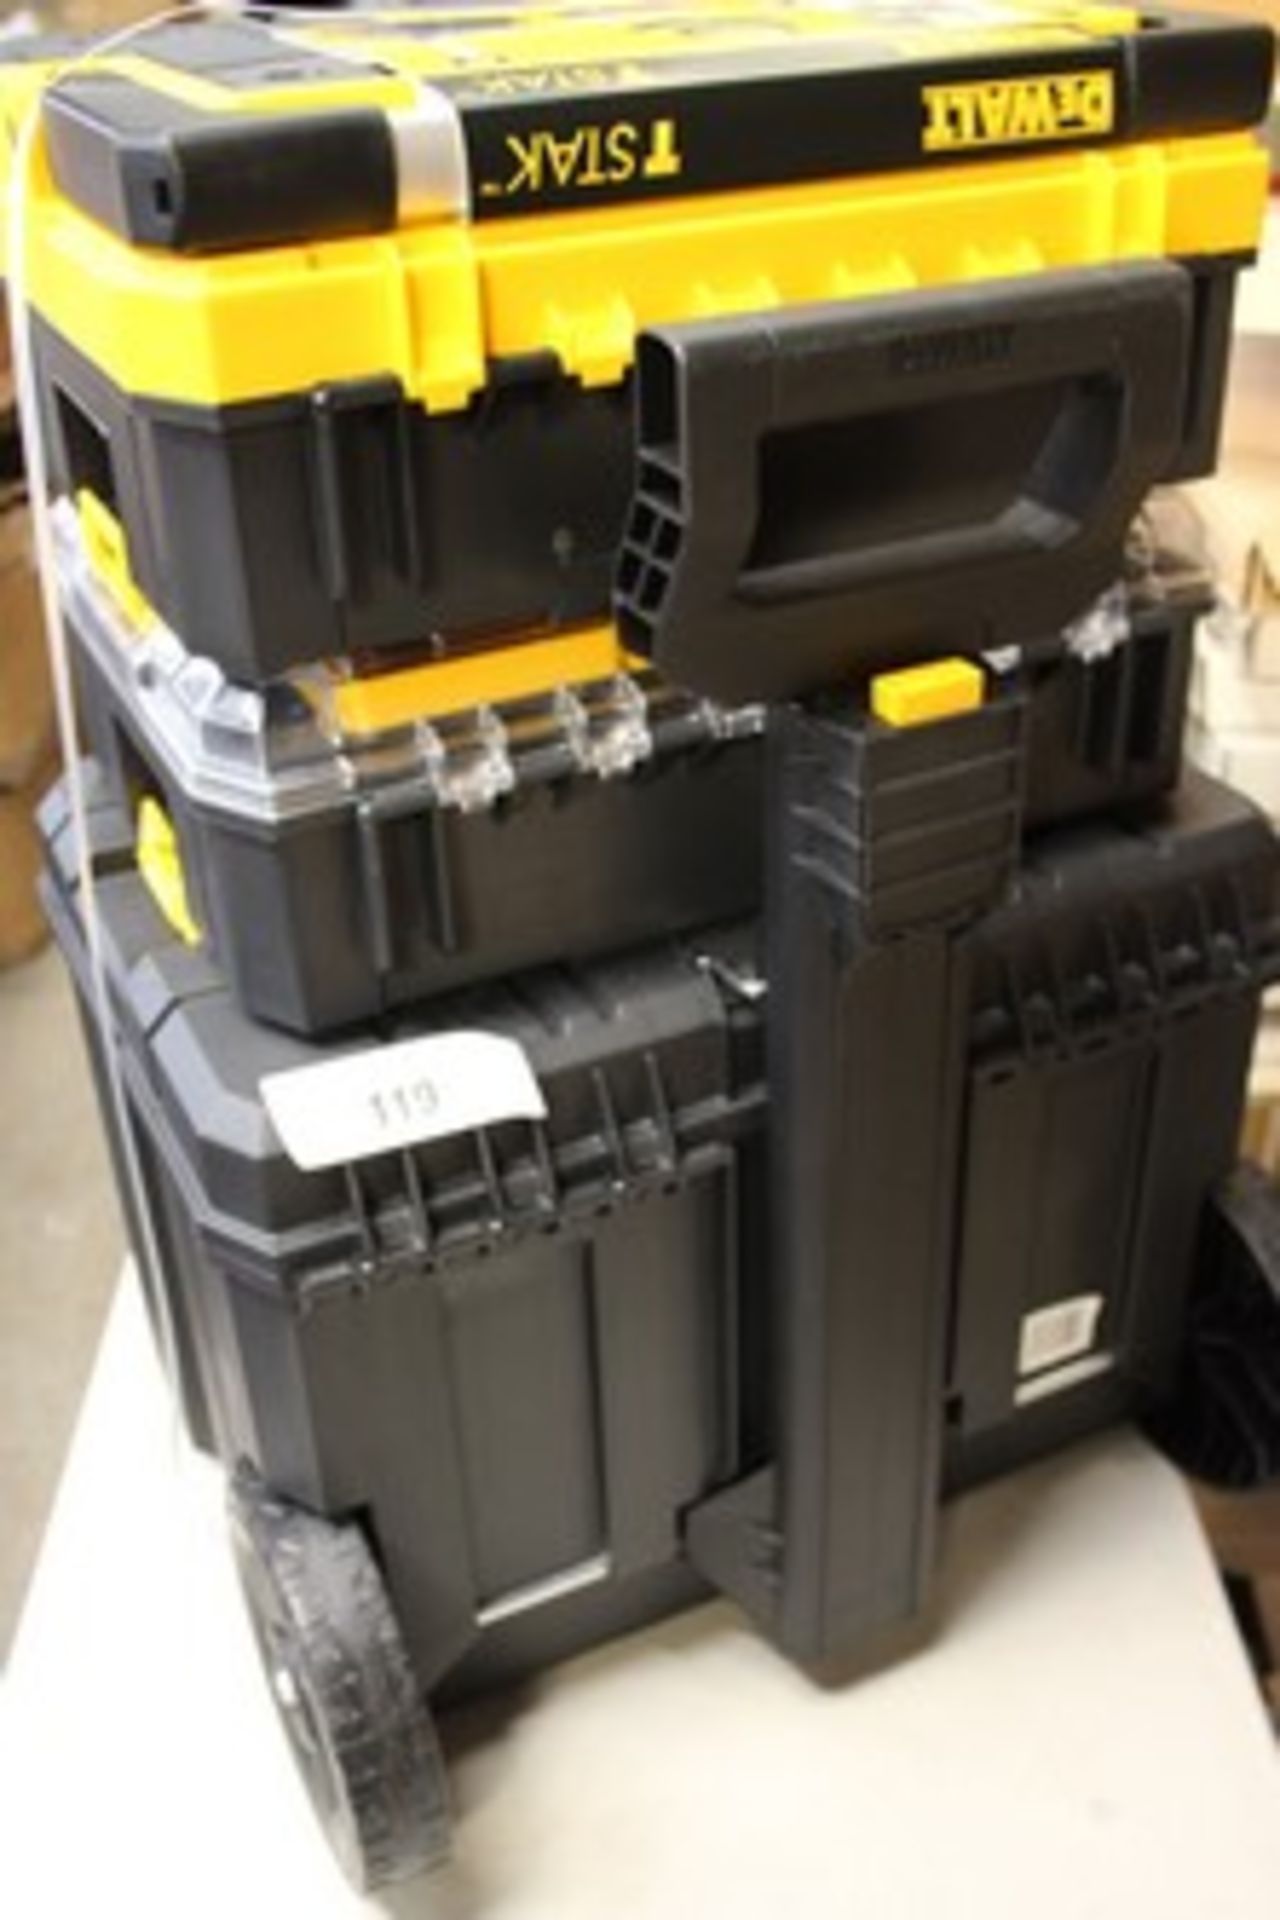 1 x DeWalt T Stack toolbox on wheels, model unknown - New (SWF11) - Image 2 of 2